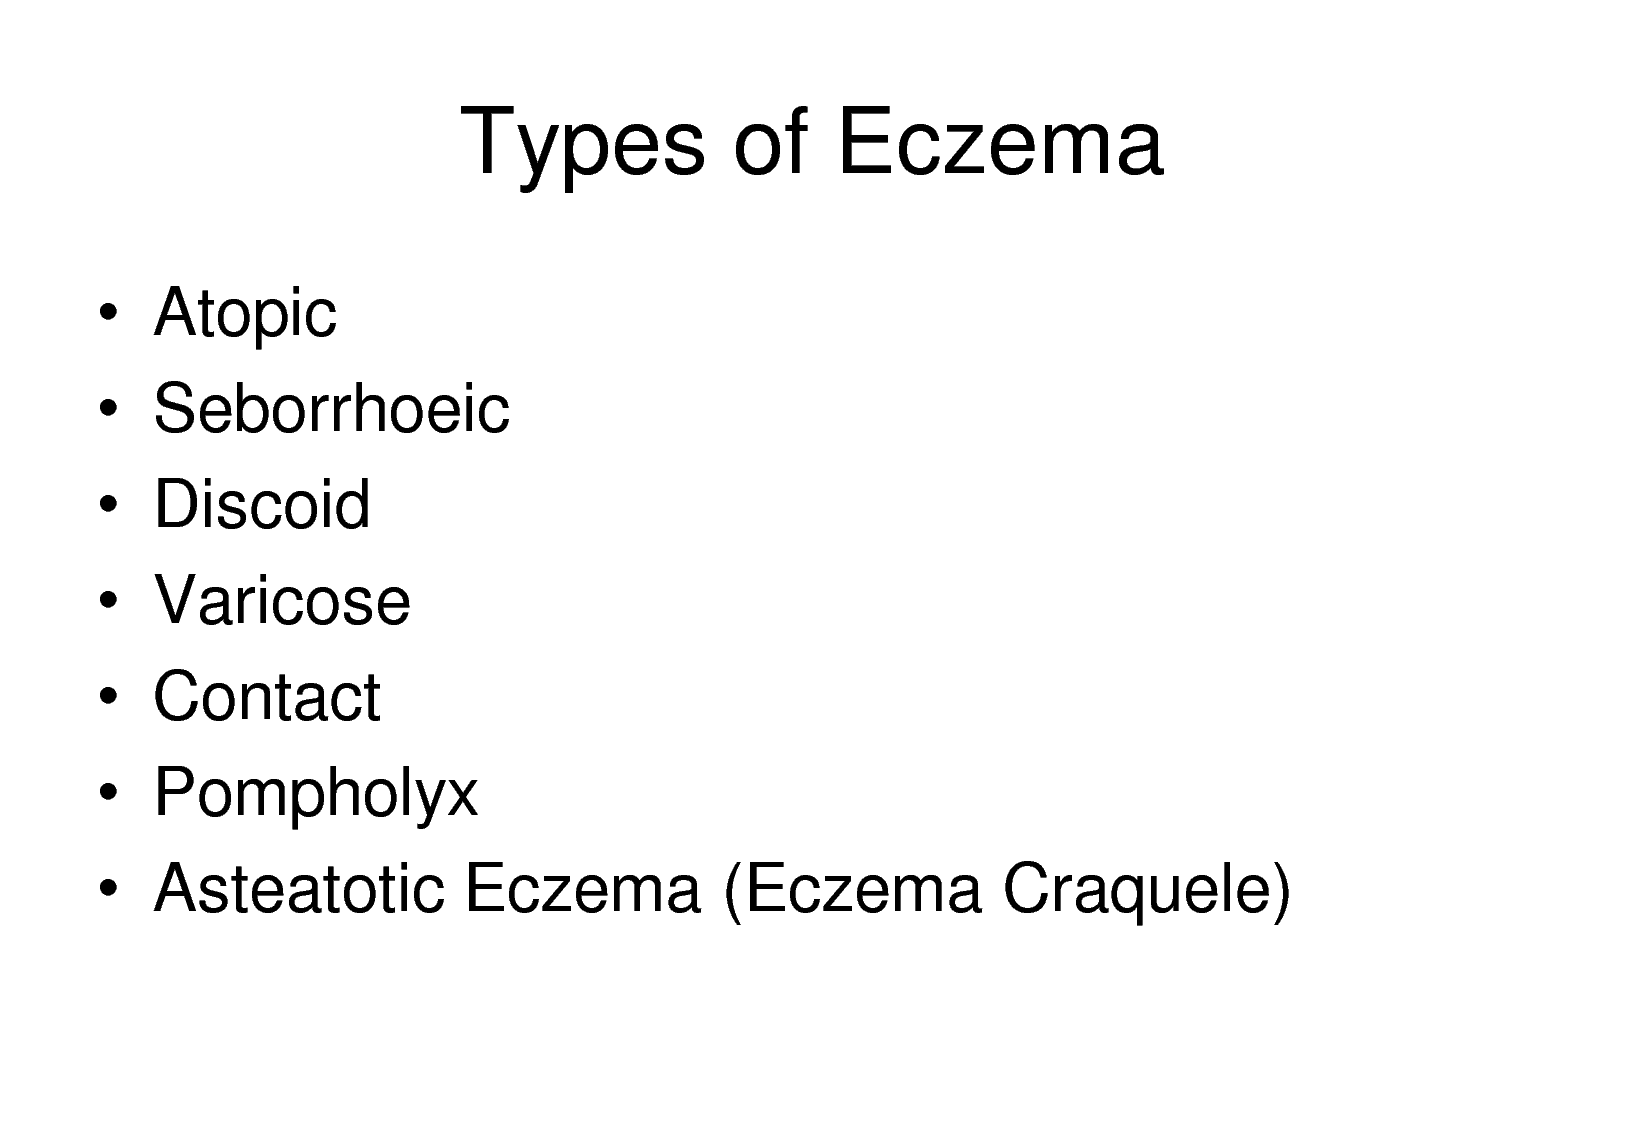 Eczema types Eczema: Types, Symptoms, Causes and Treatment